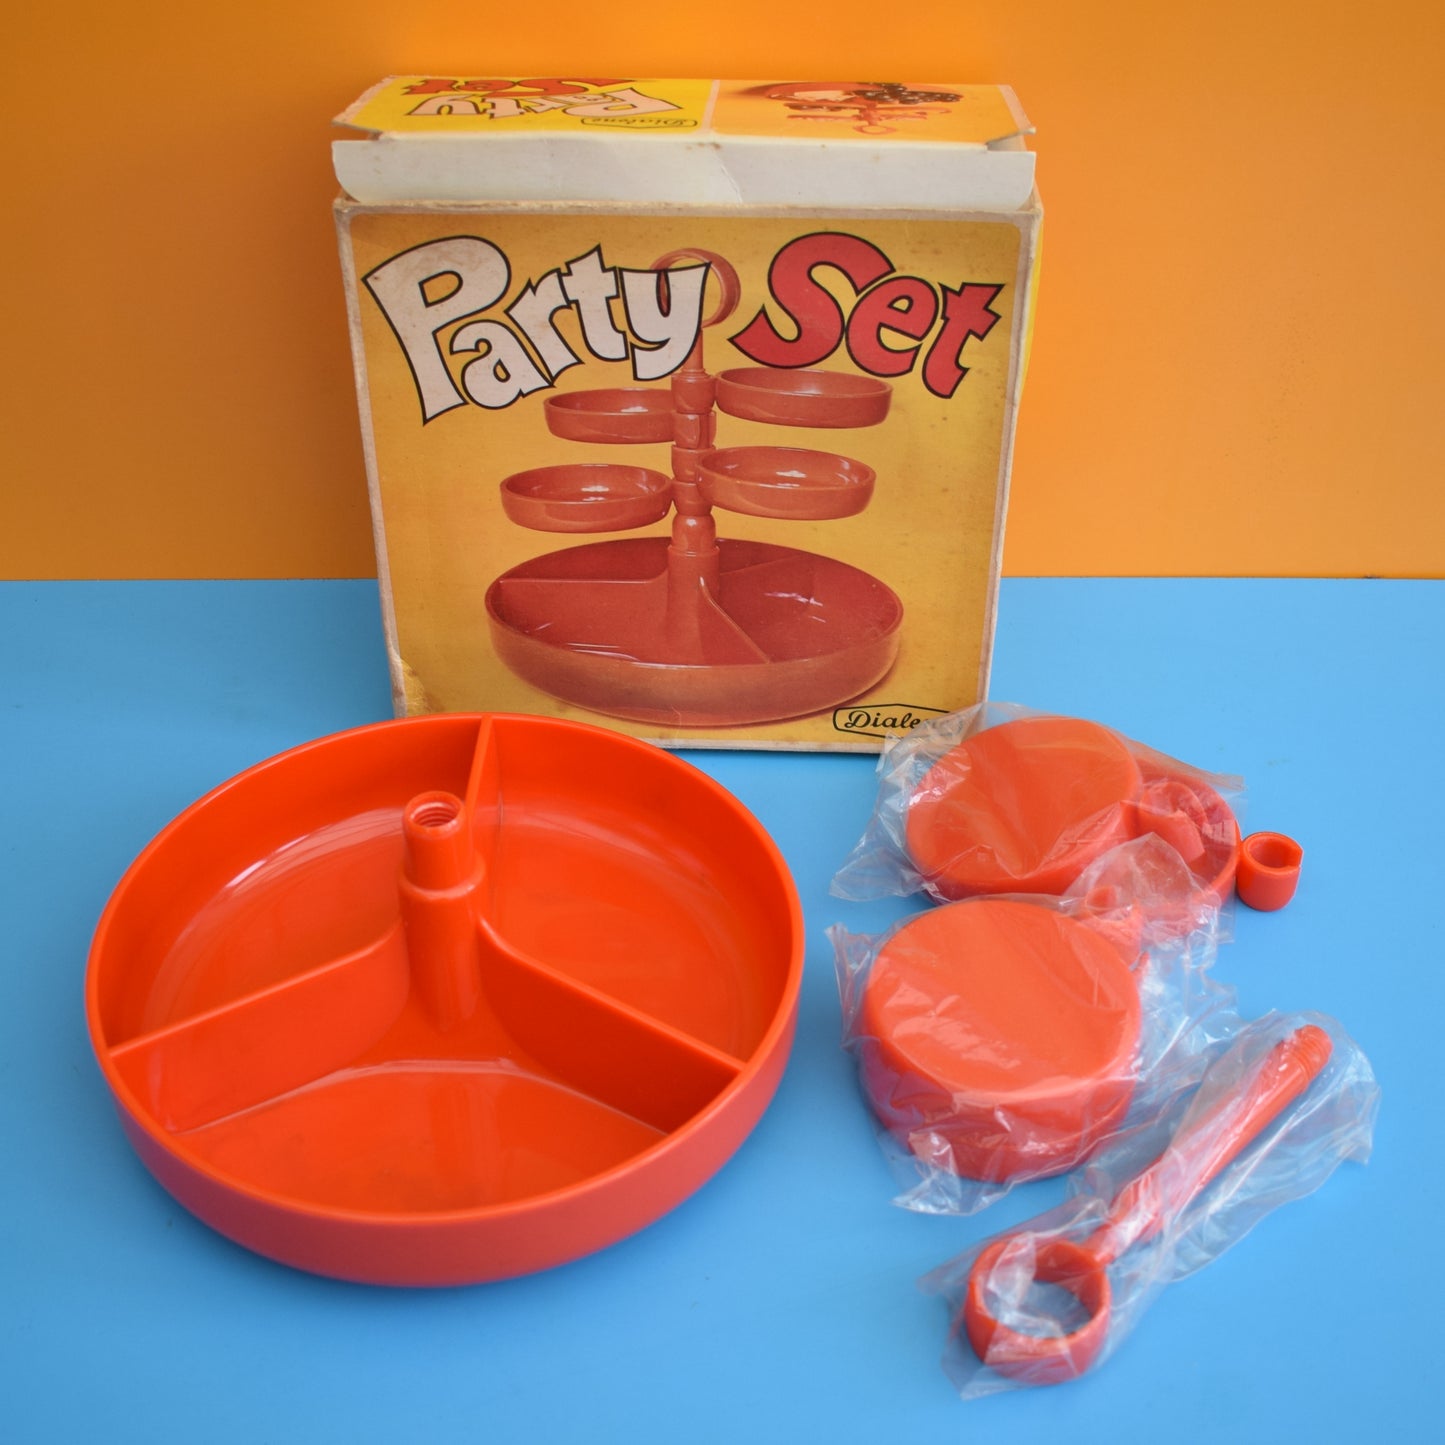 Vintage 1970s Plastic Party Snack Set - Boxed - Orange